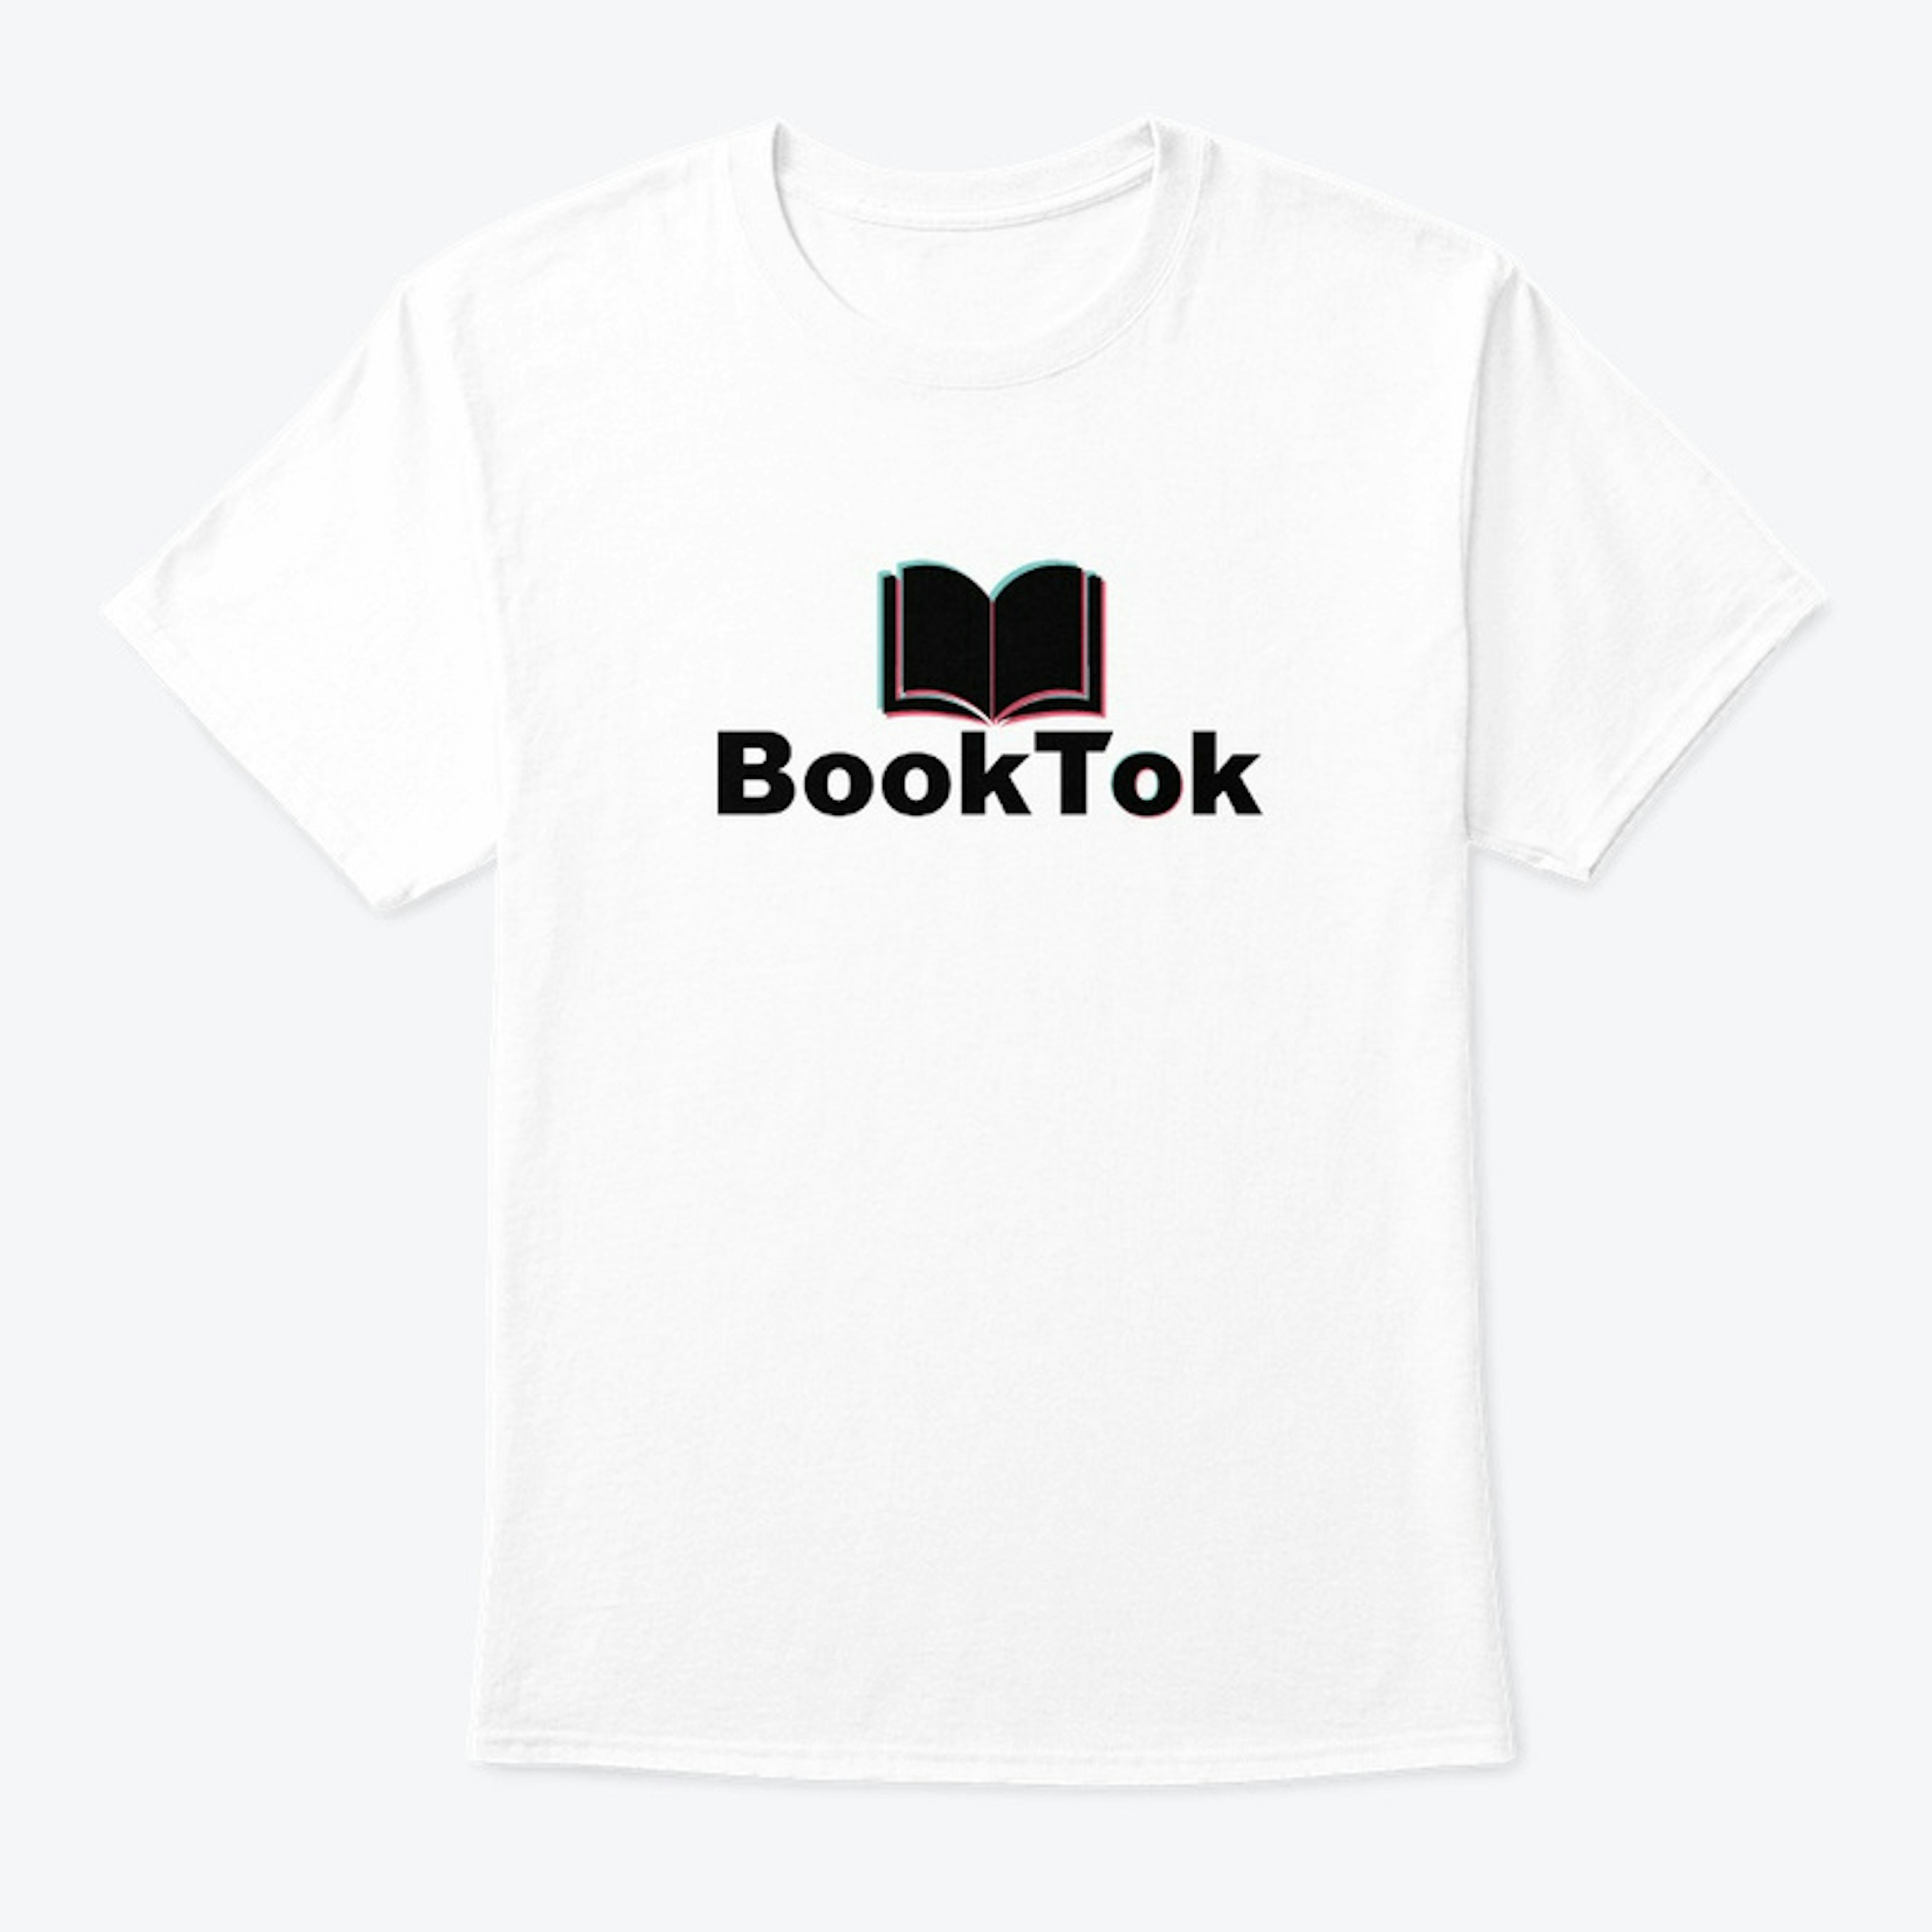 BookTok